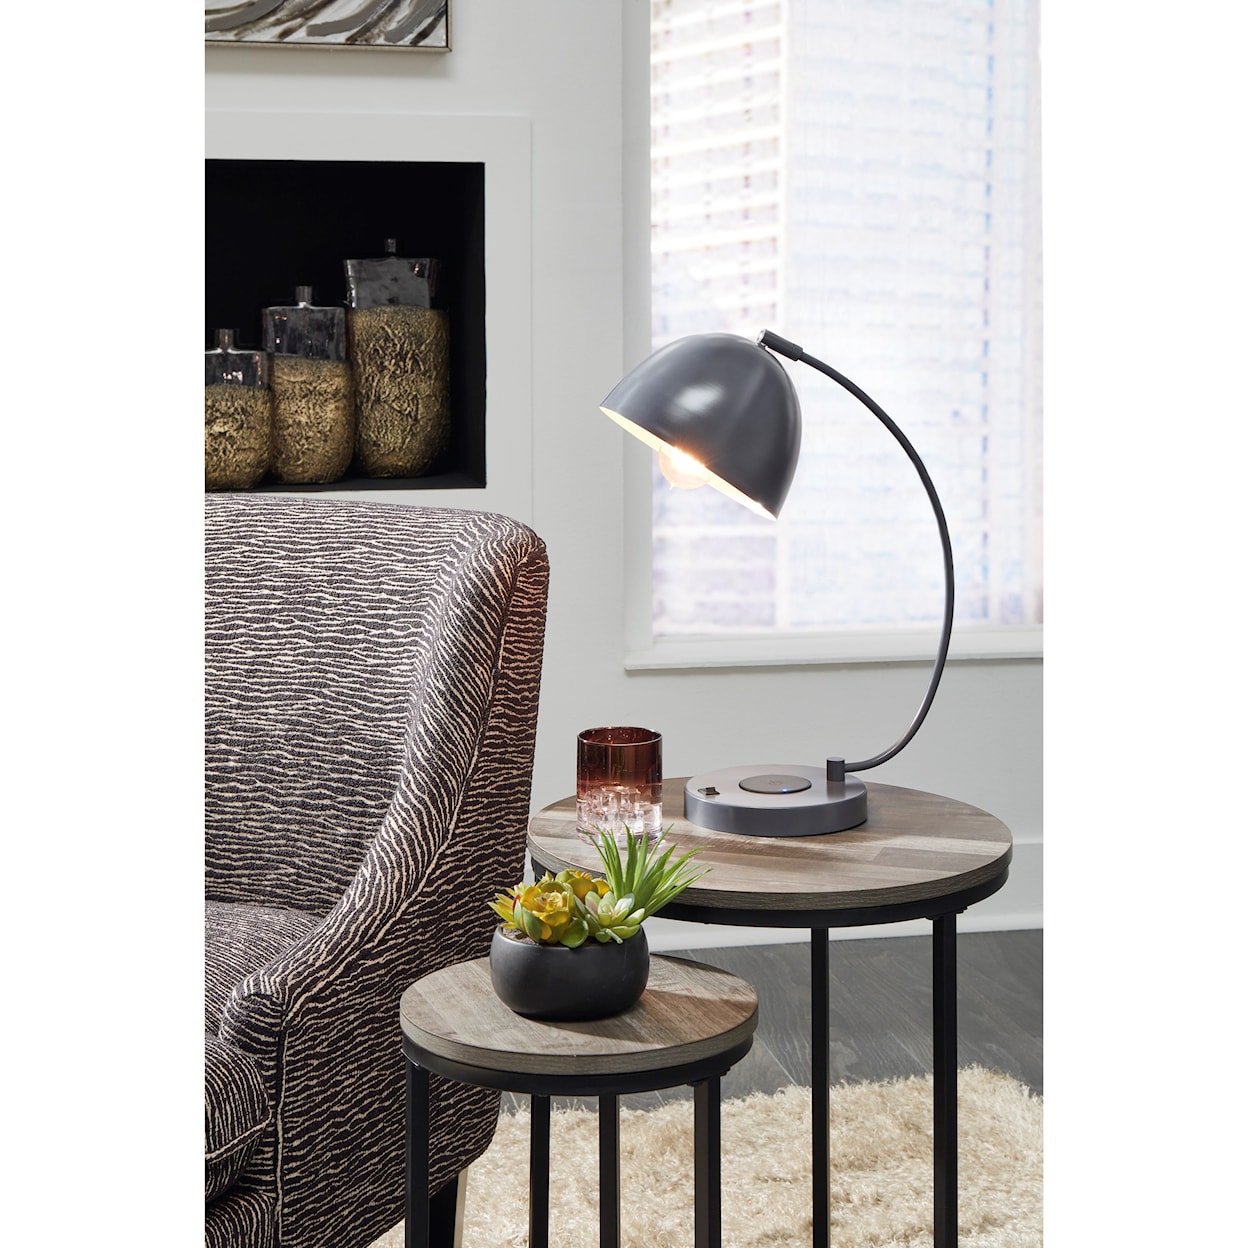 Signature Lamps - Contemporary Austbeck Gray Metal Desk Lamp